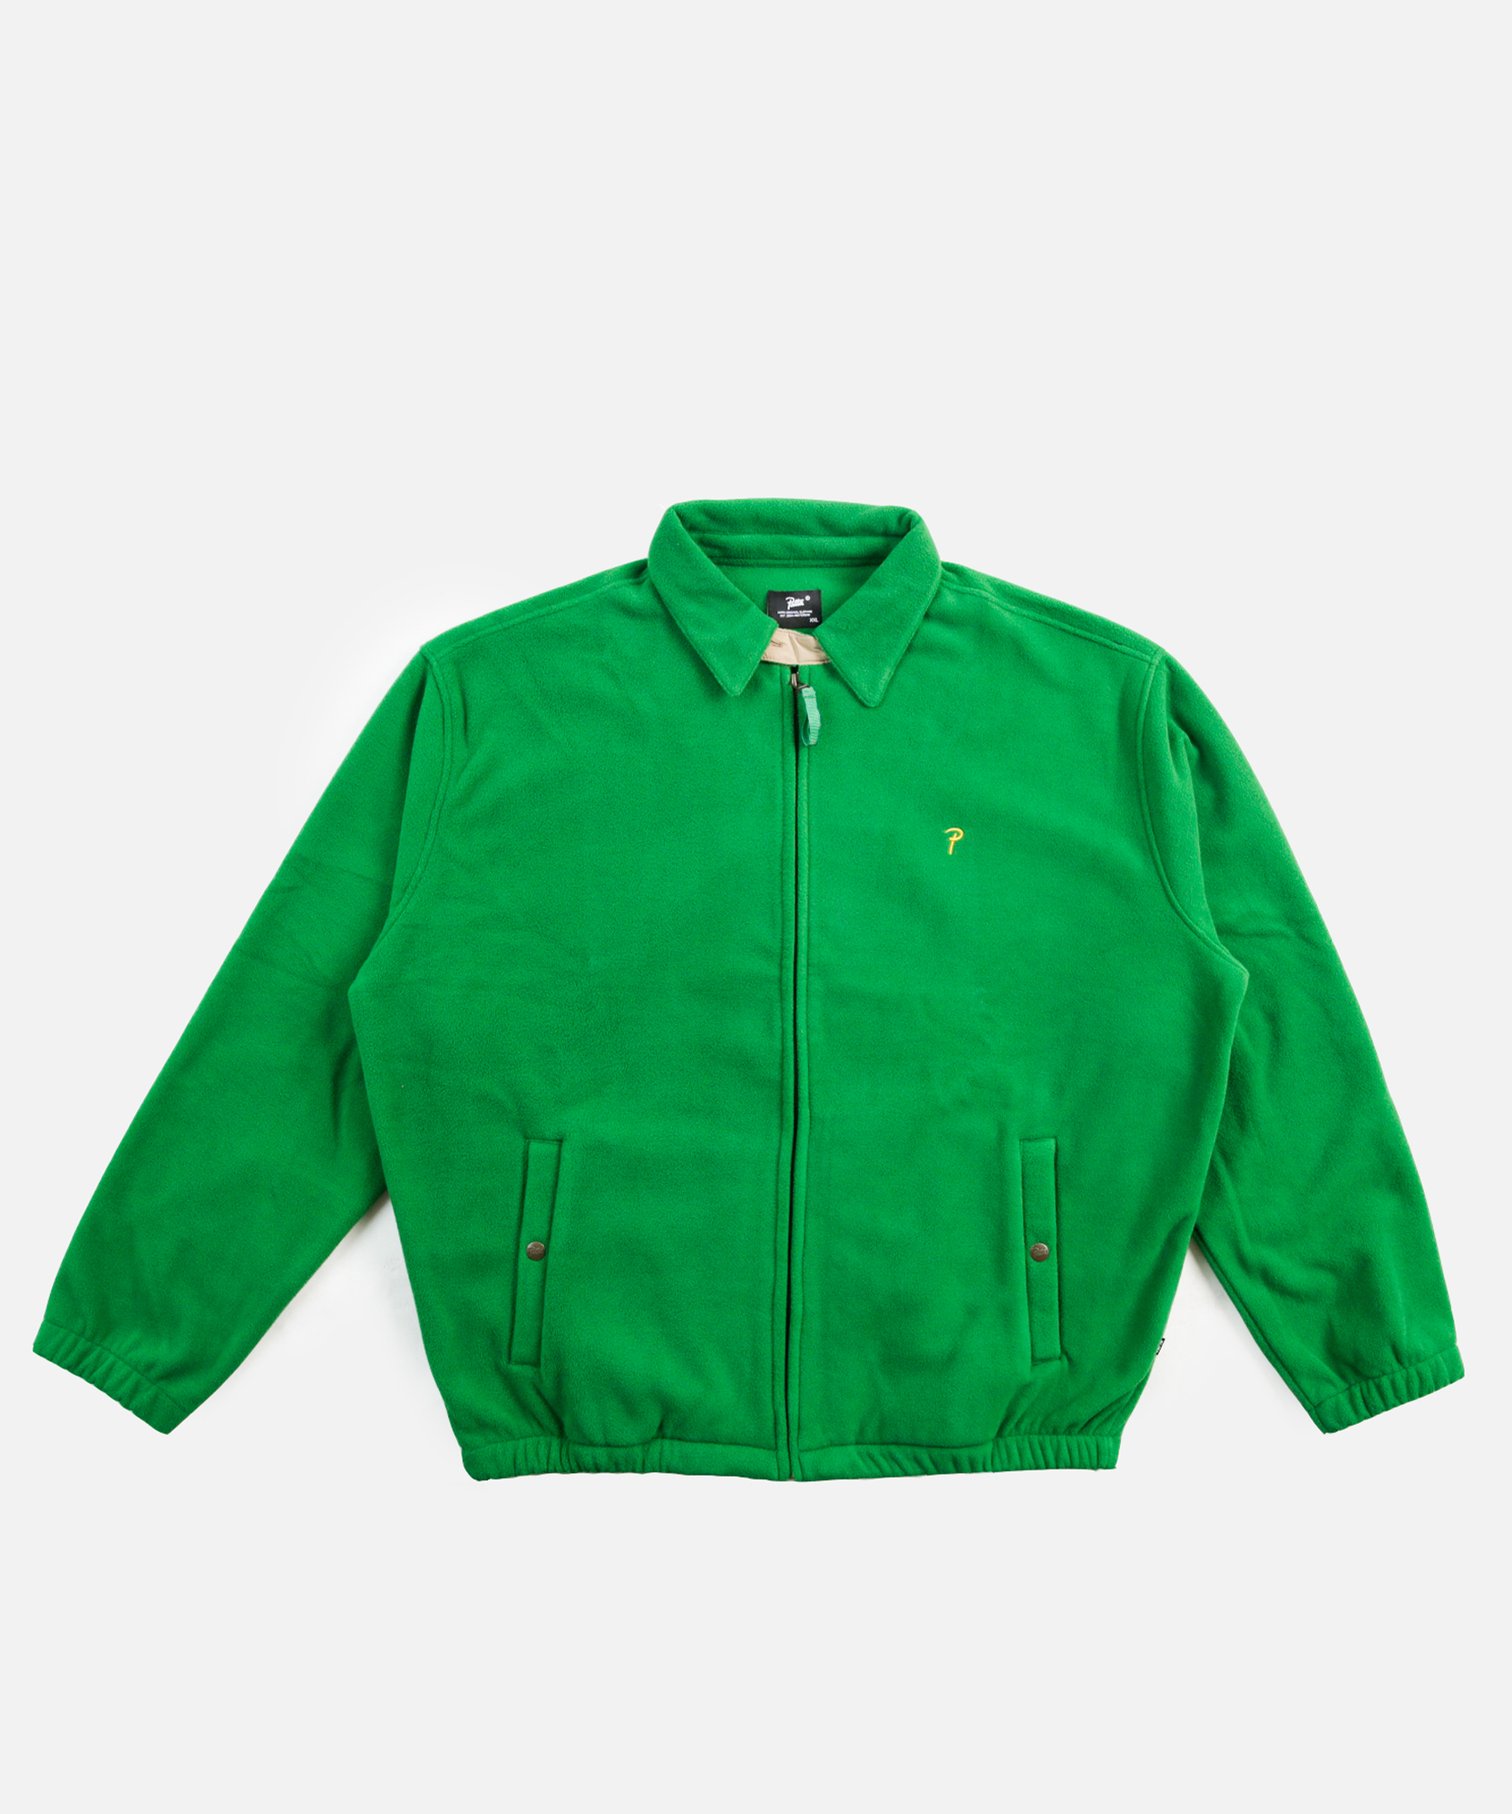 Patta Polar Fleece Jacket groen Summer Sale